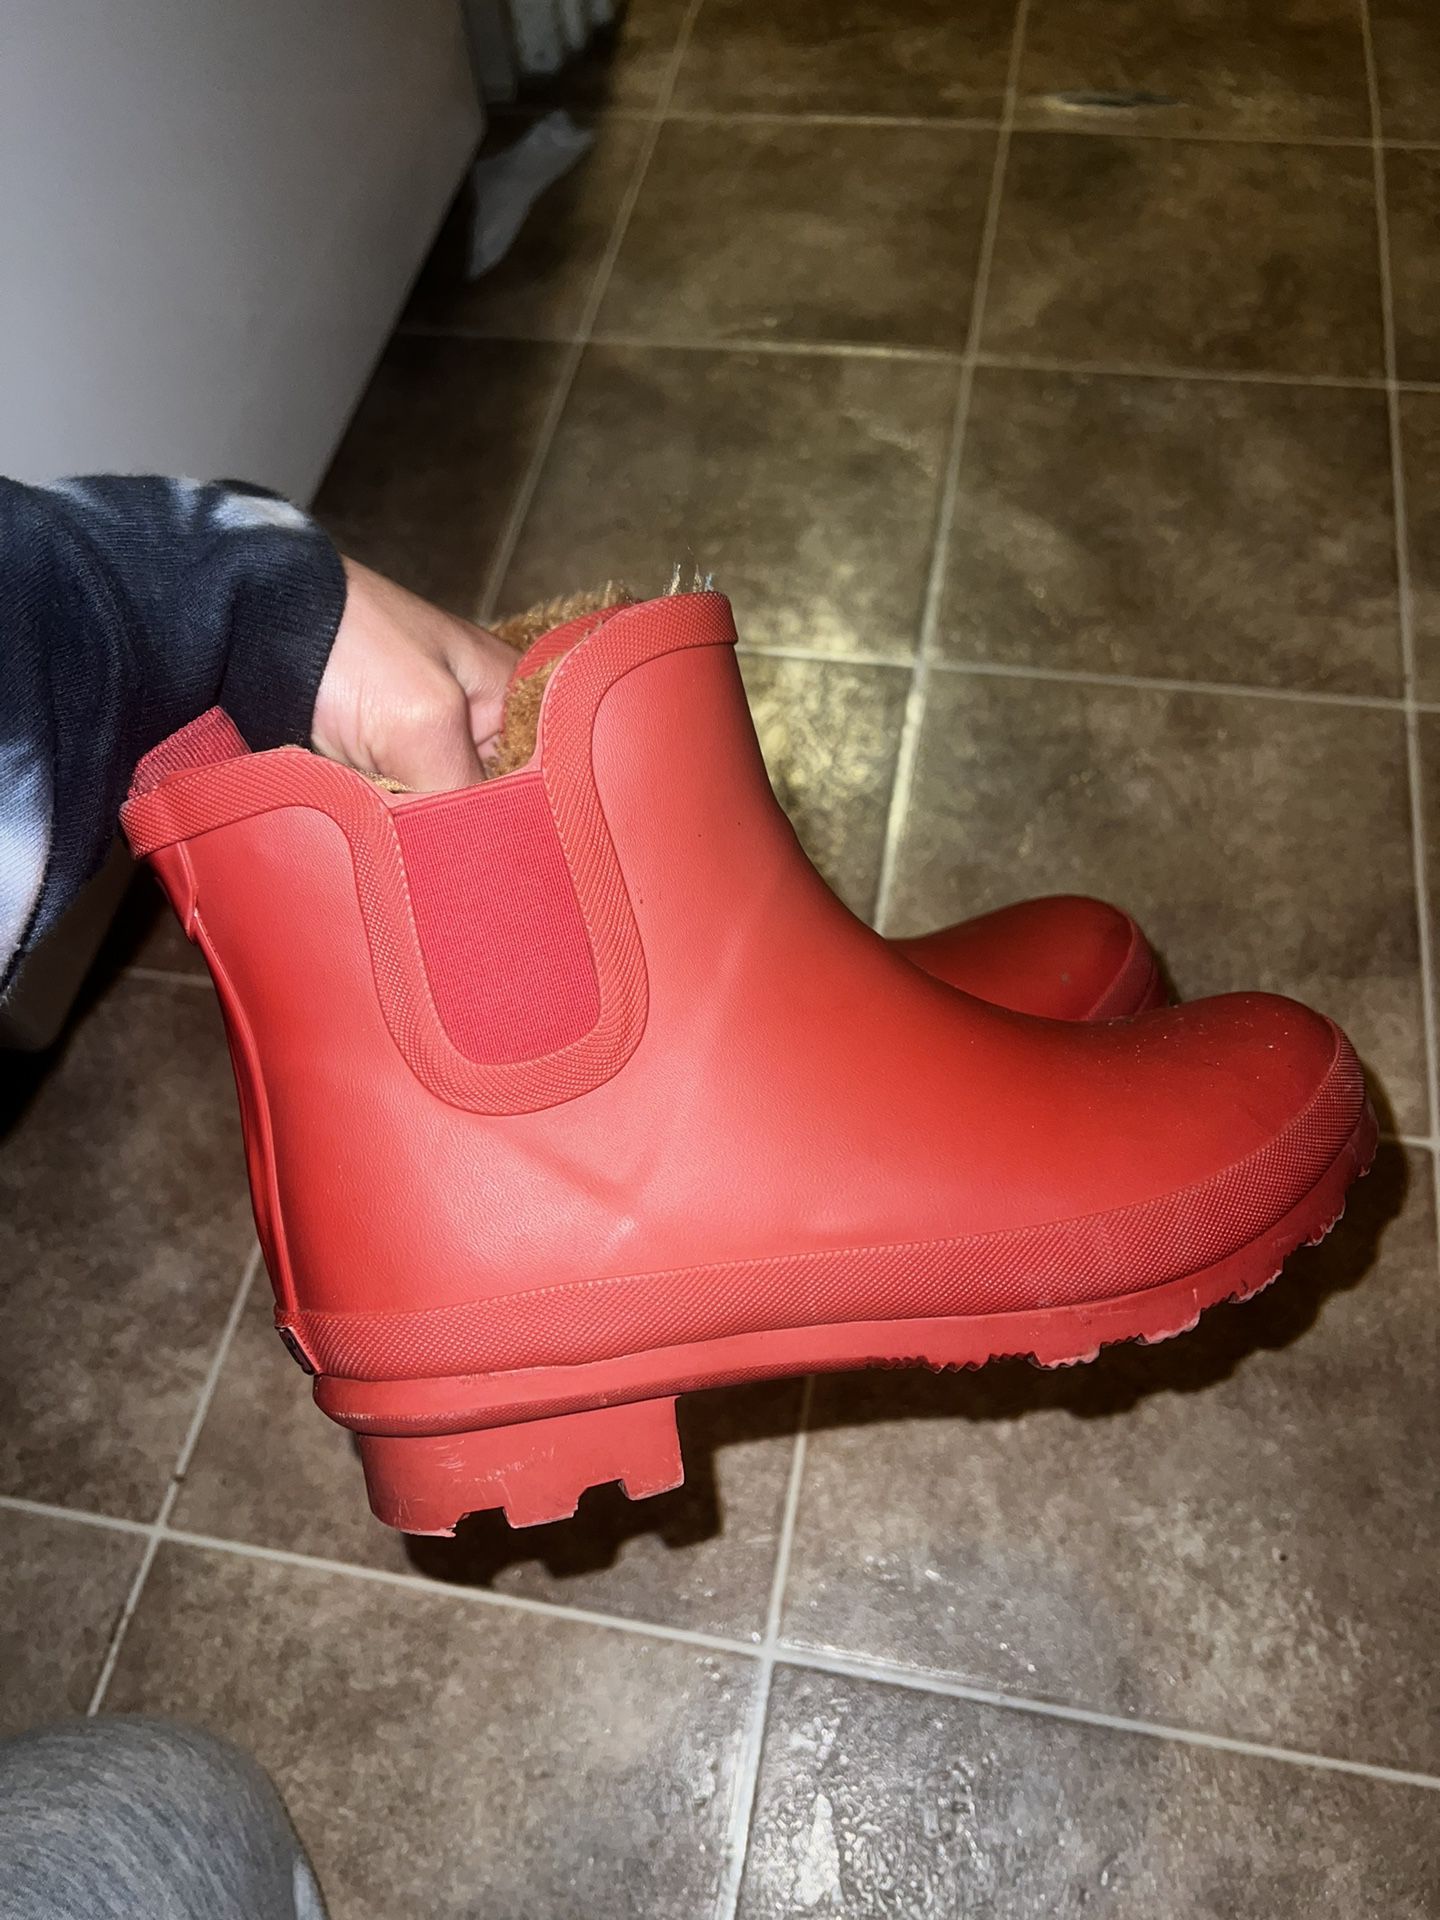 Red Rubber Rain/Winter Boots